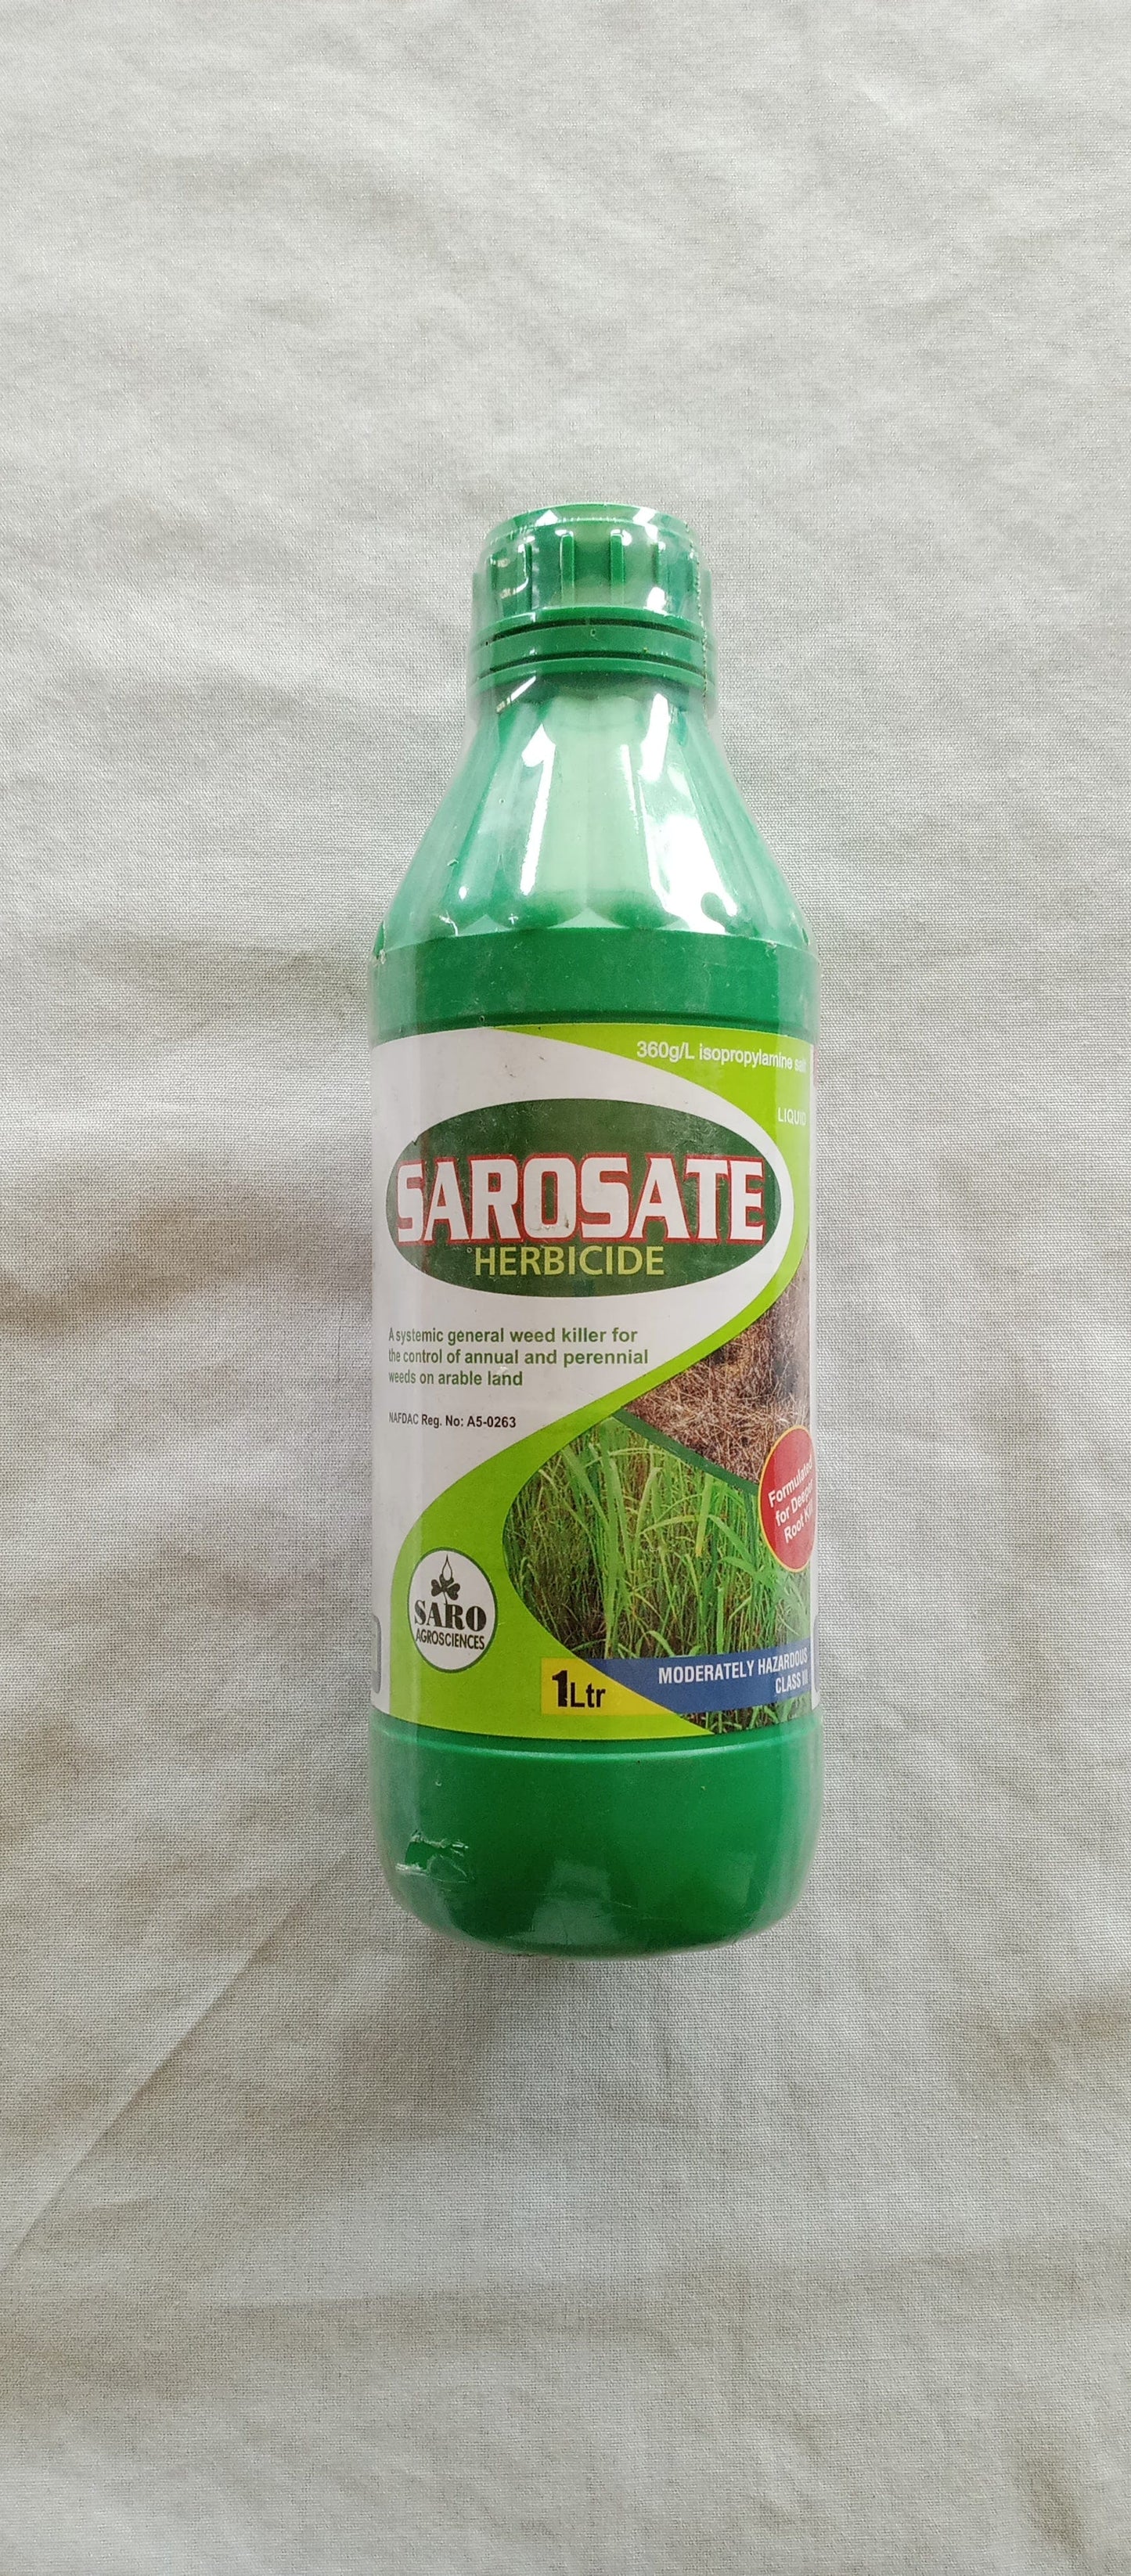 Glyphosate Herbicides Agro-toolz Sarosate